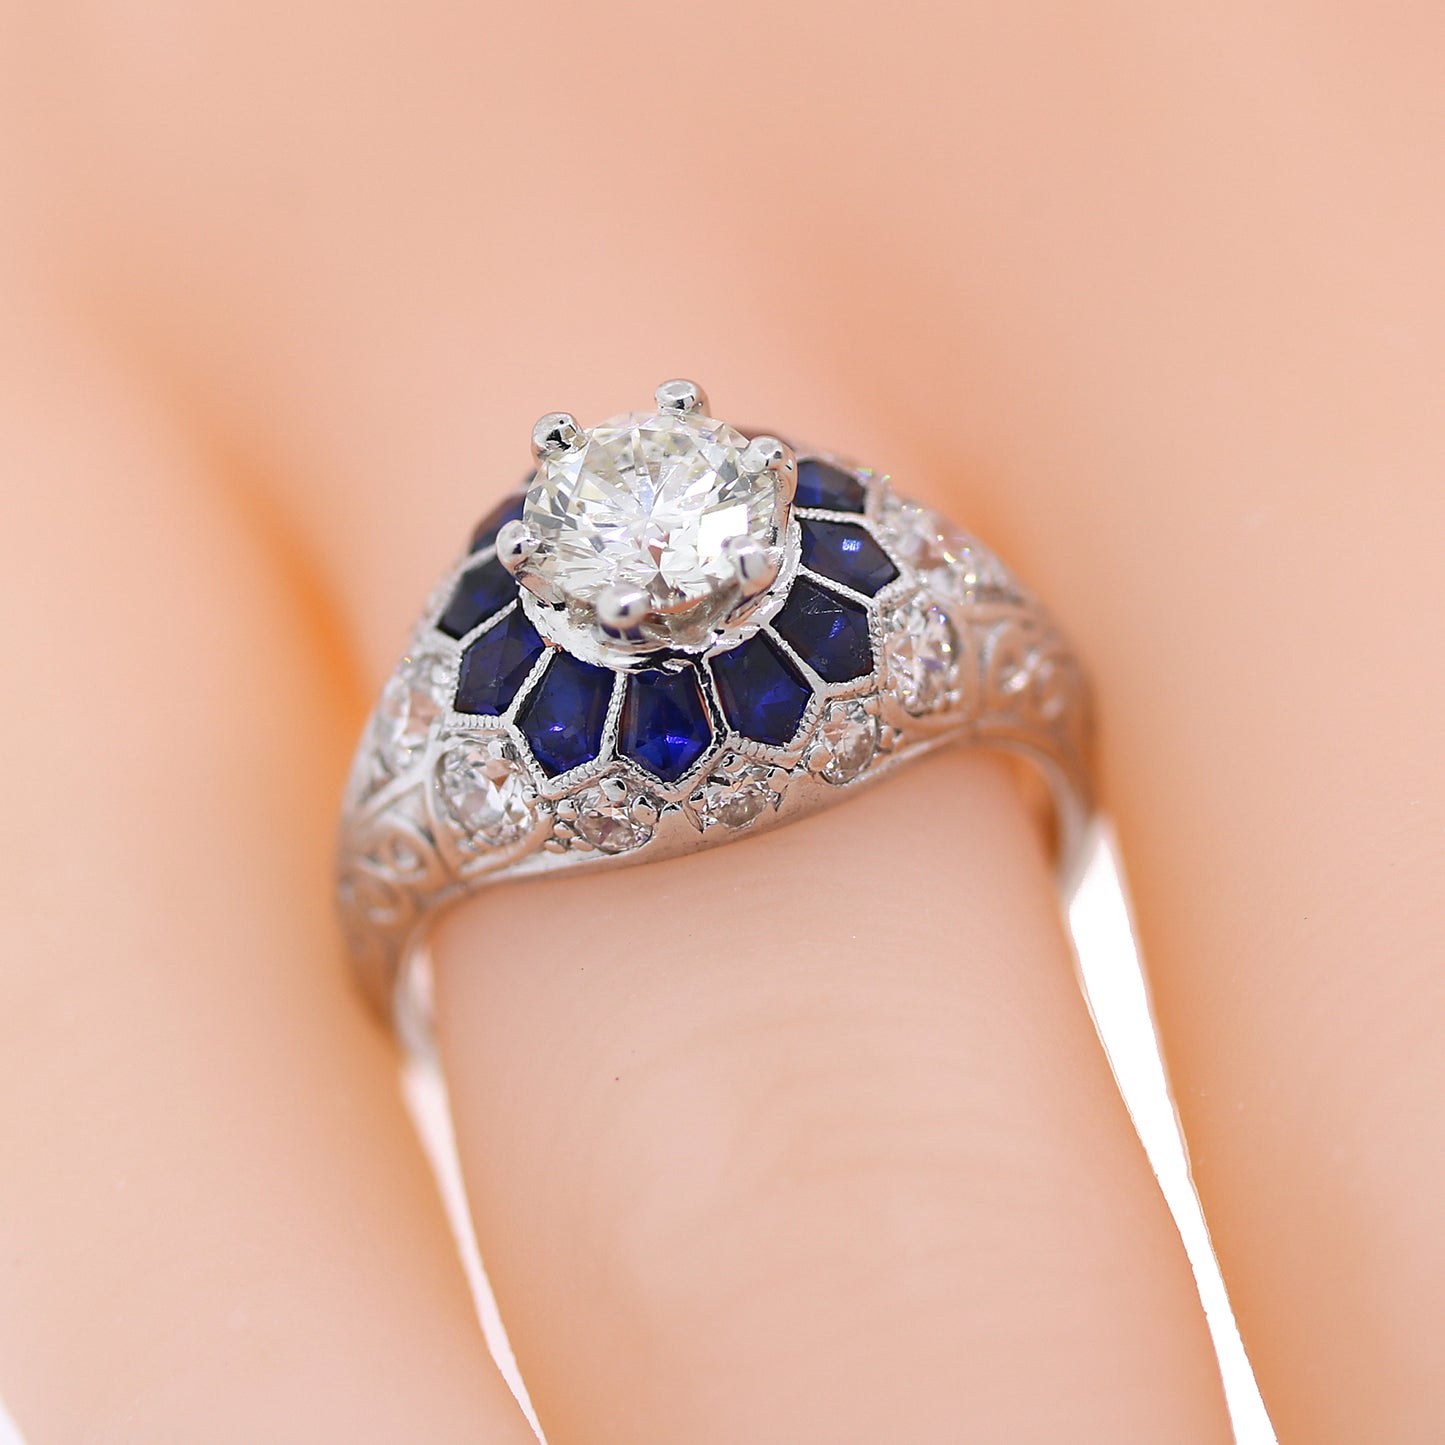 Platinum Art Deco Style Sapphire and Diamond Engagement Ring Size 7.25